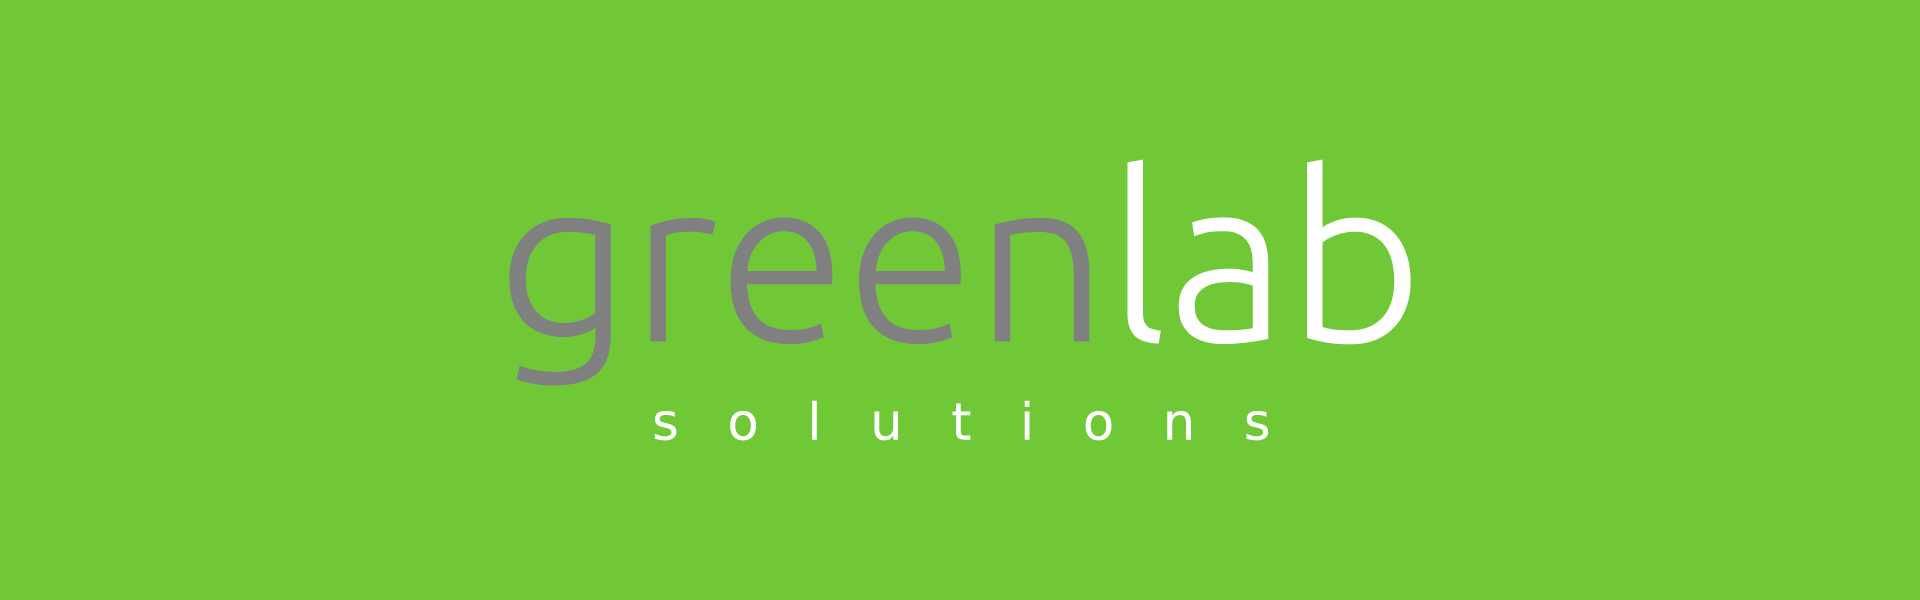 greenlab solutions baneris